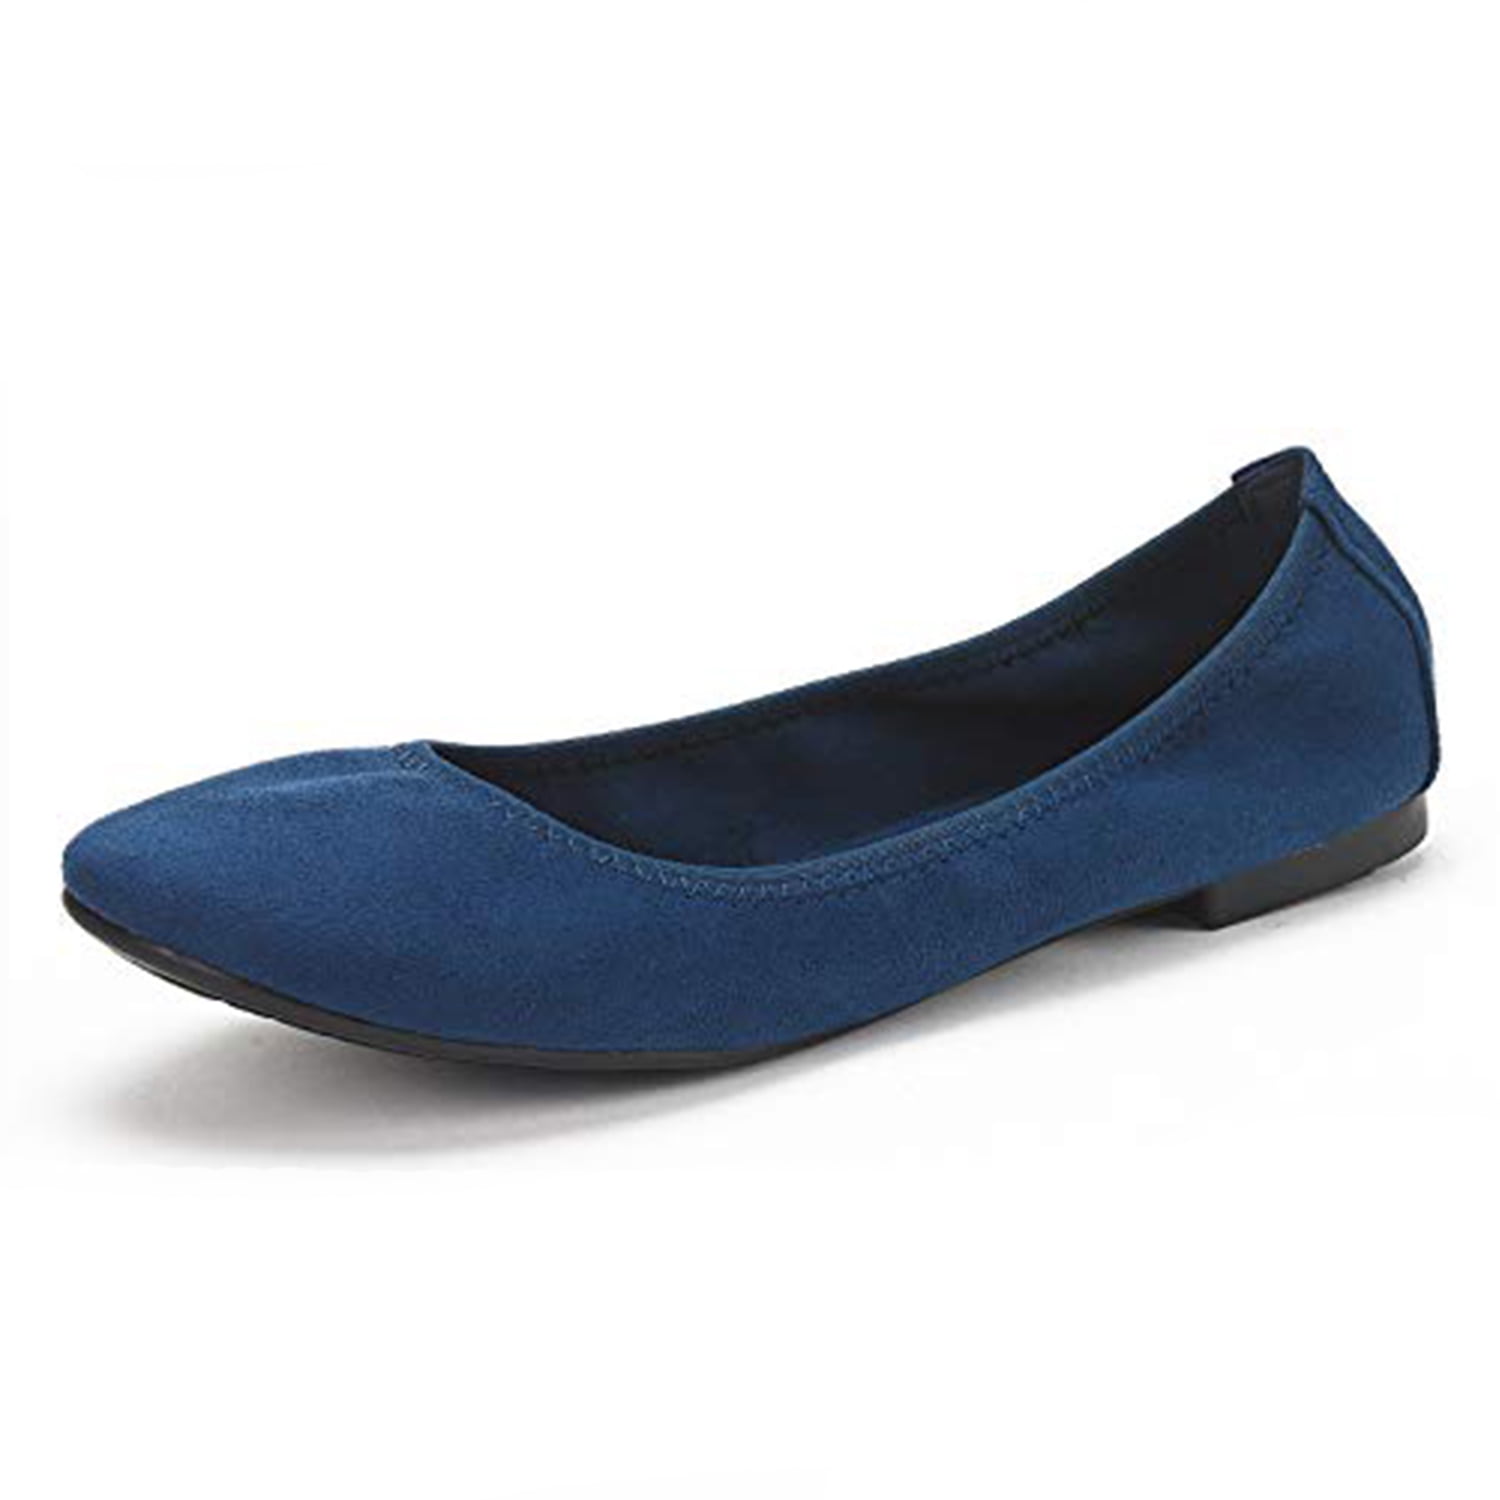 Buy > navy flat shoes ladies > in stock